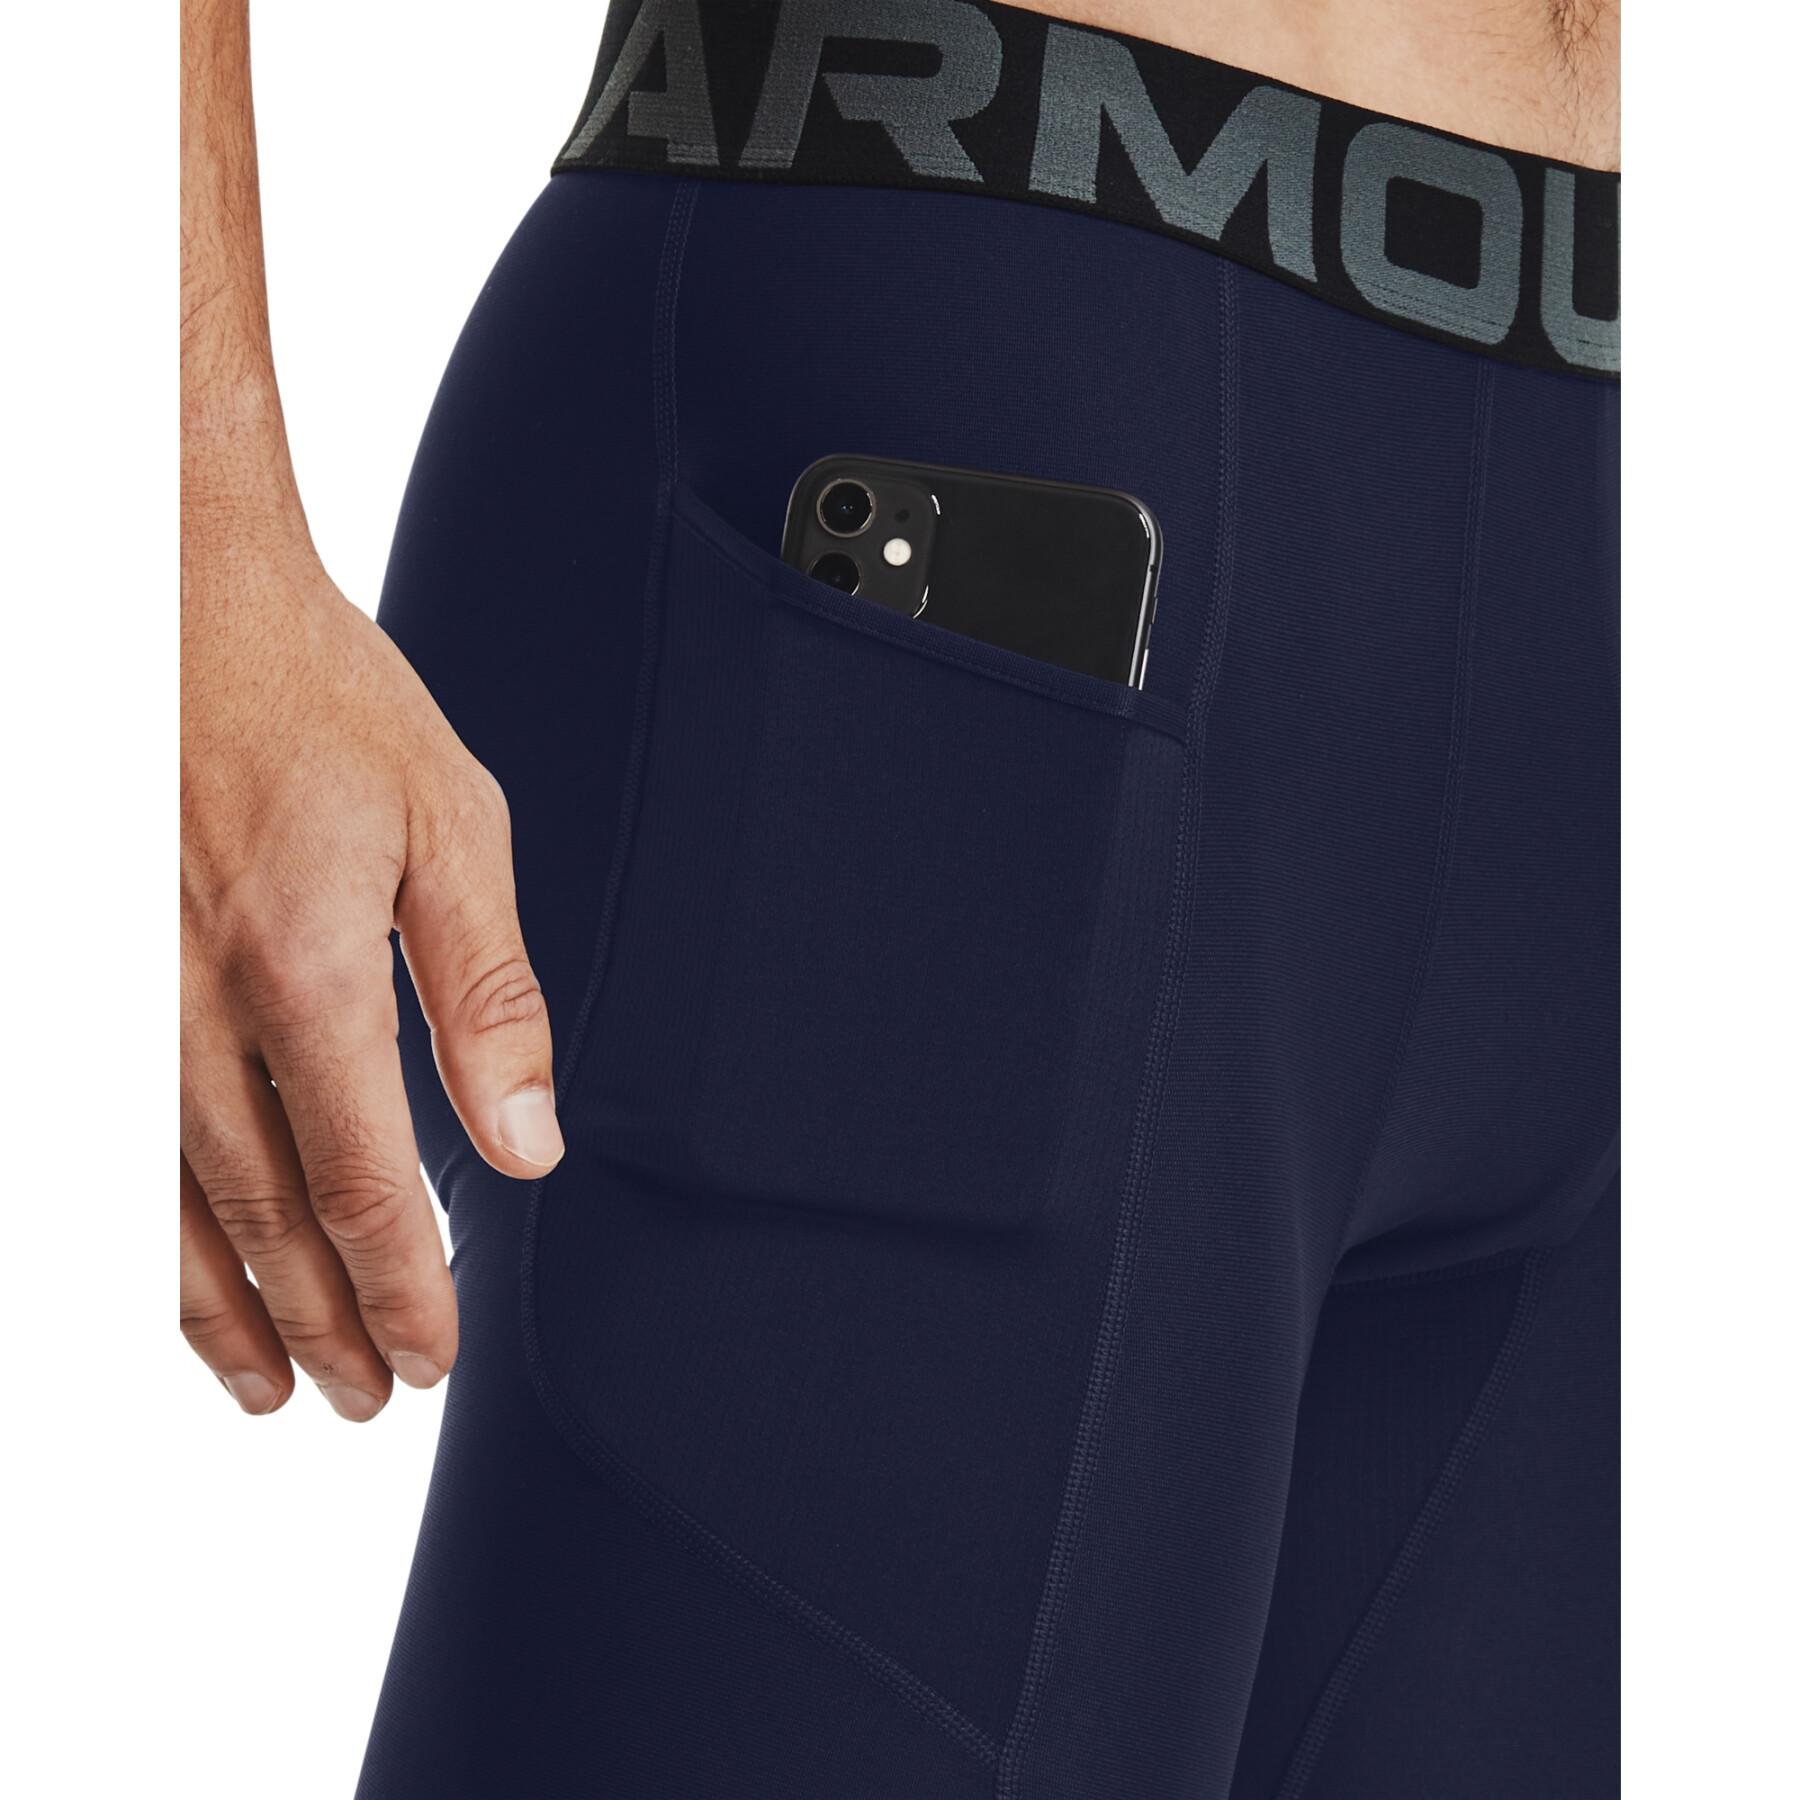 Long bike shorts with pocket Under Armour HeatGear®